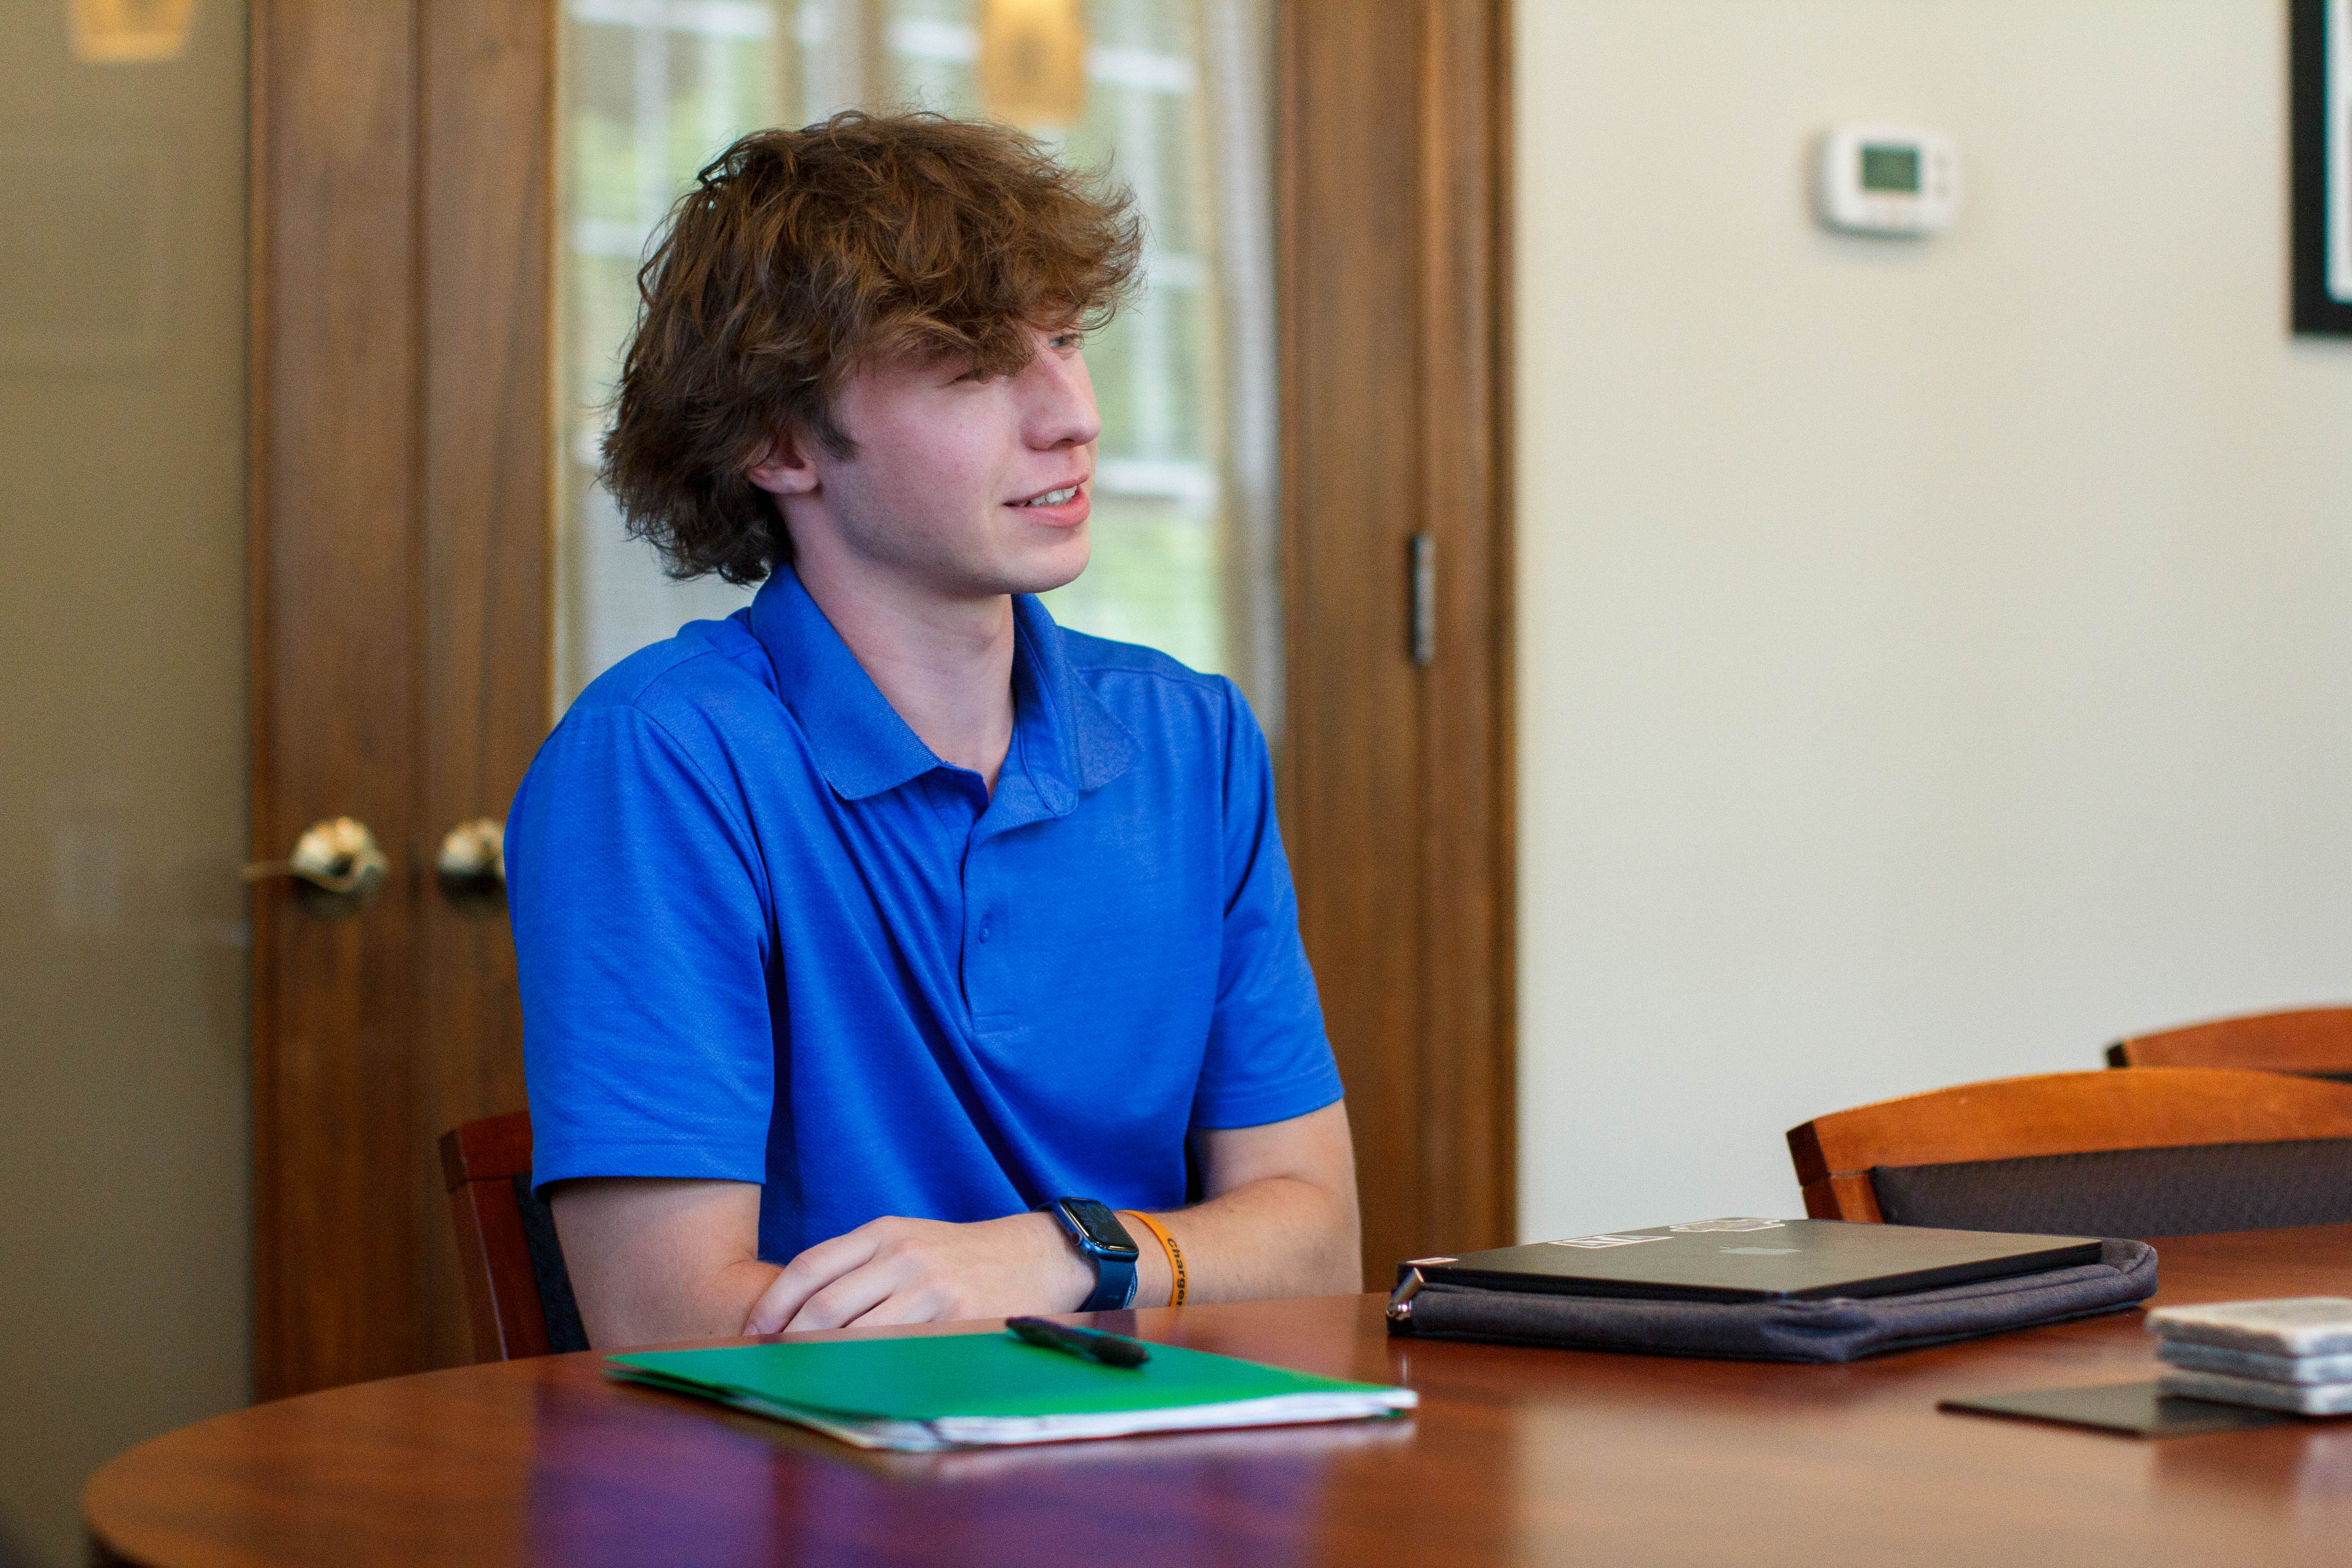 Crawfordsville native Ben Cody ’26 is spending his summer working as the Mayor’s intern.